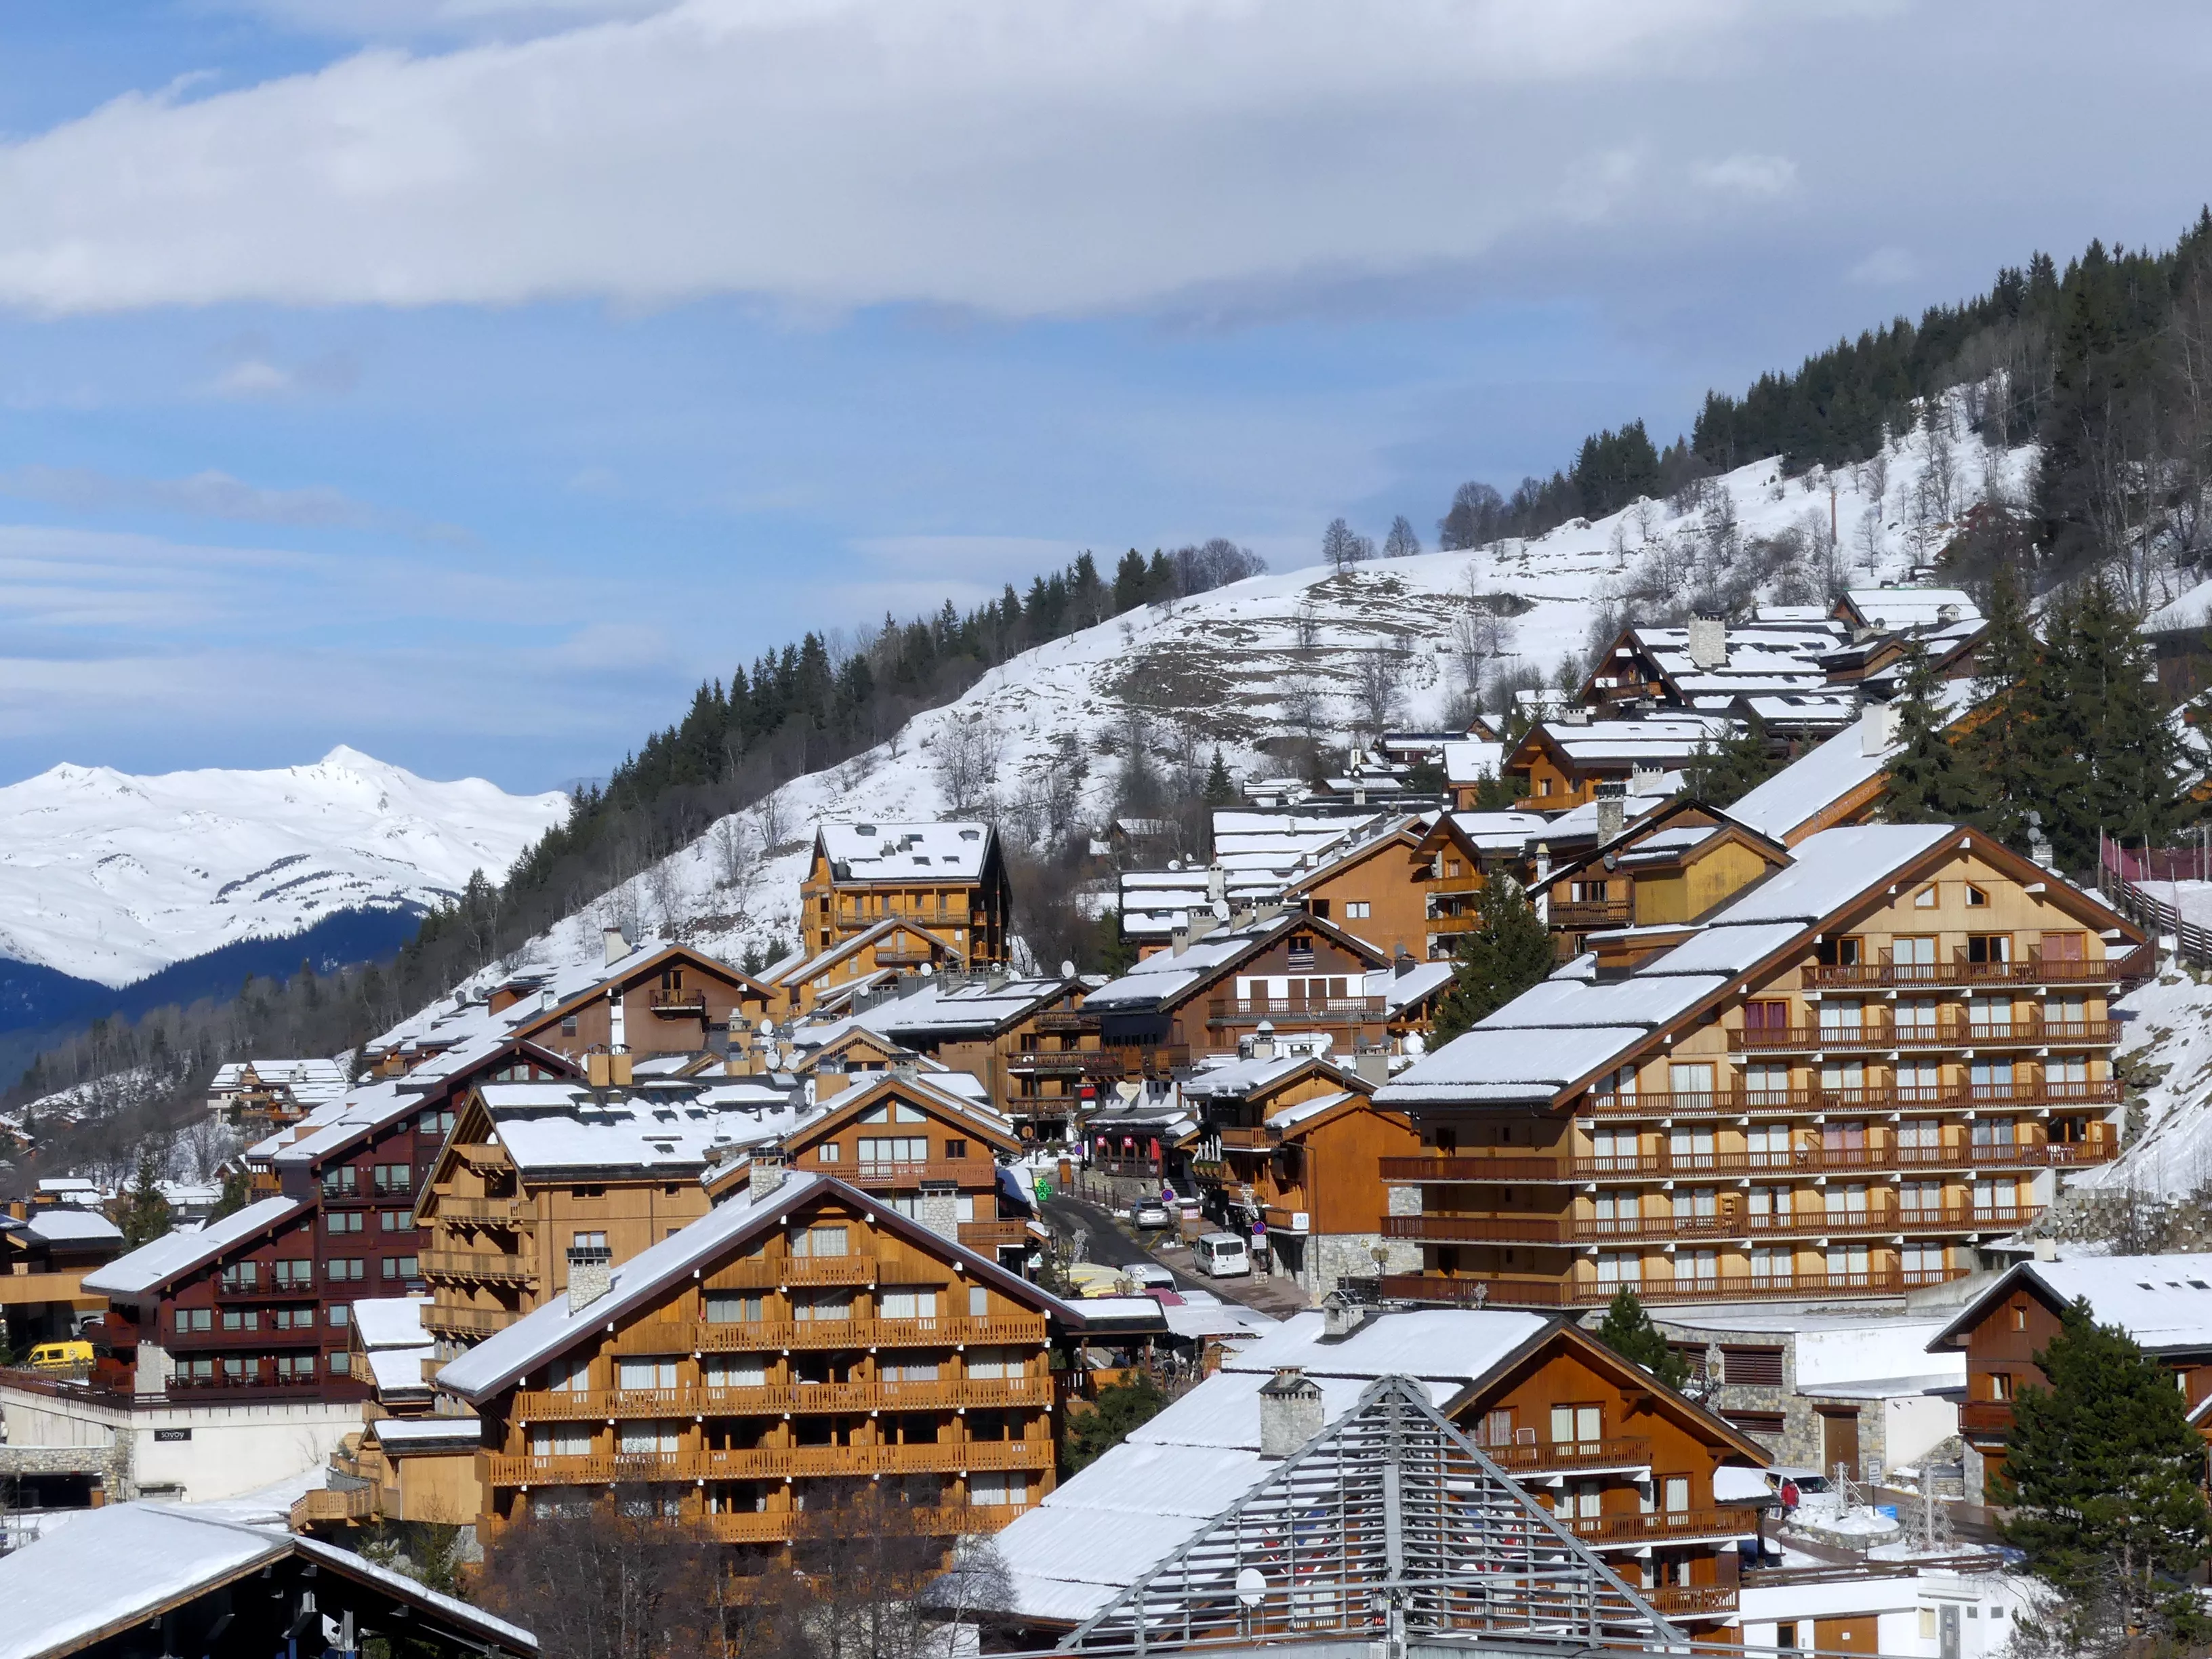 Meribel in France, Europe | Snowboarding,Skiing - Rated 4.7